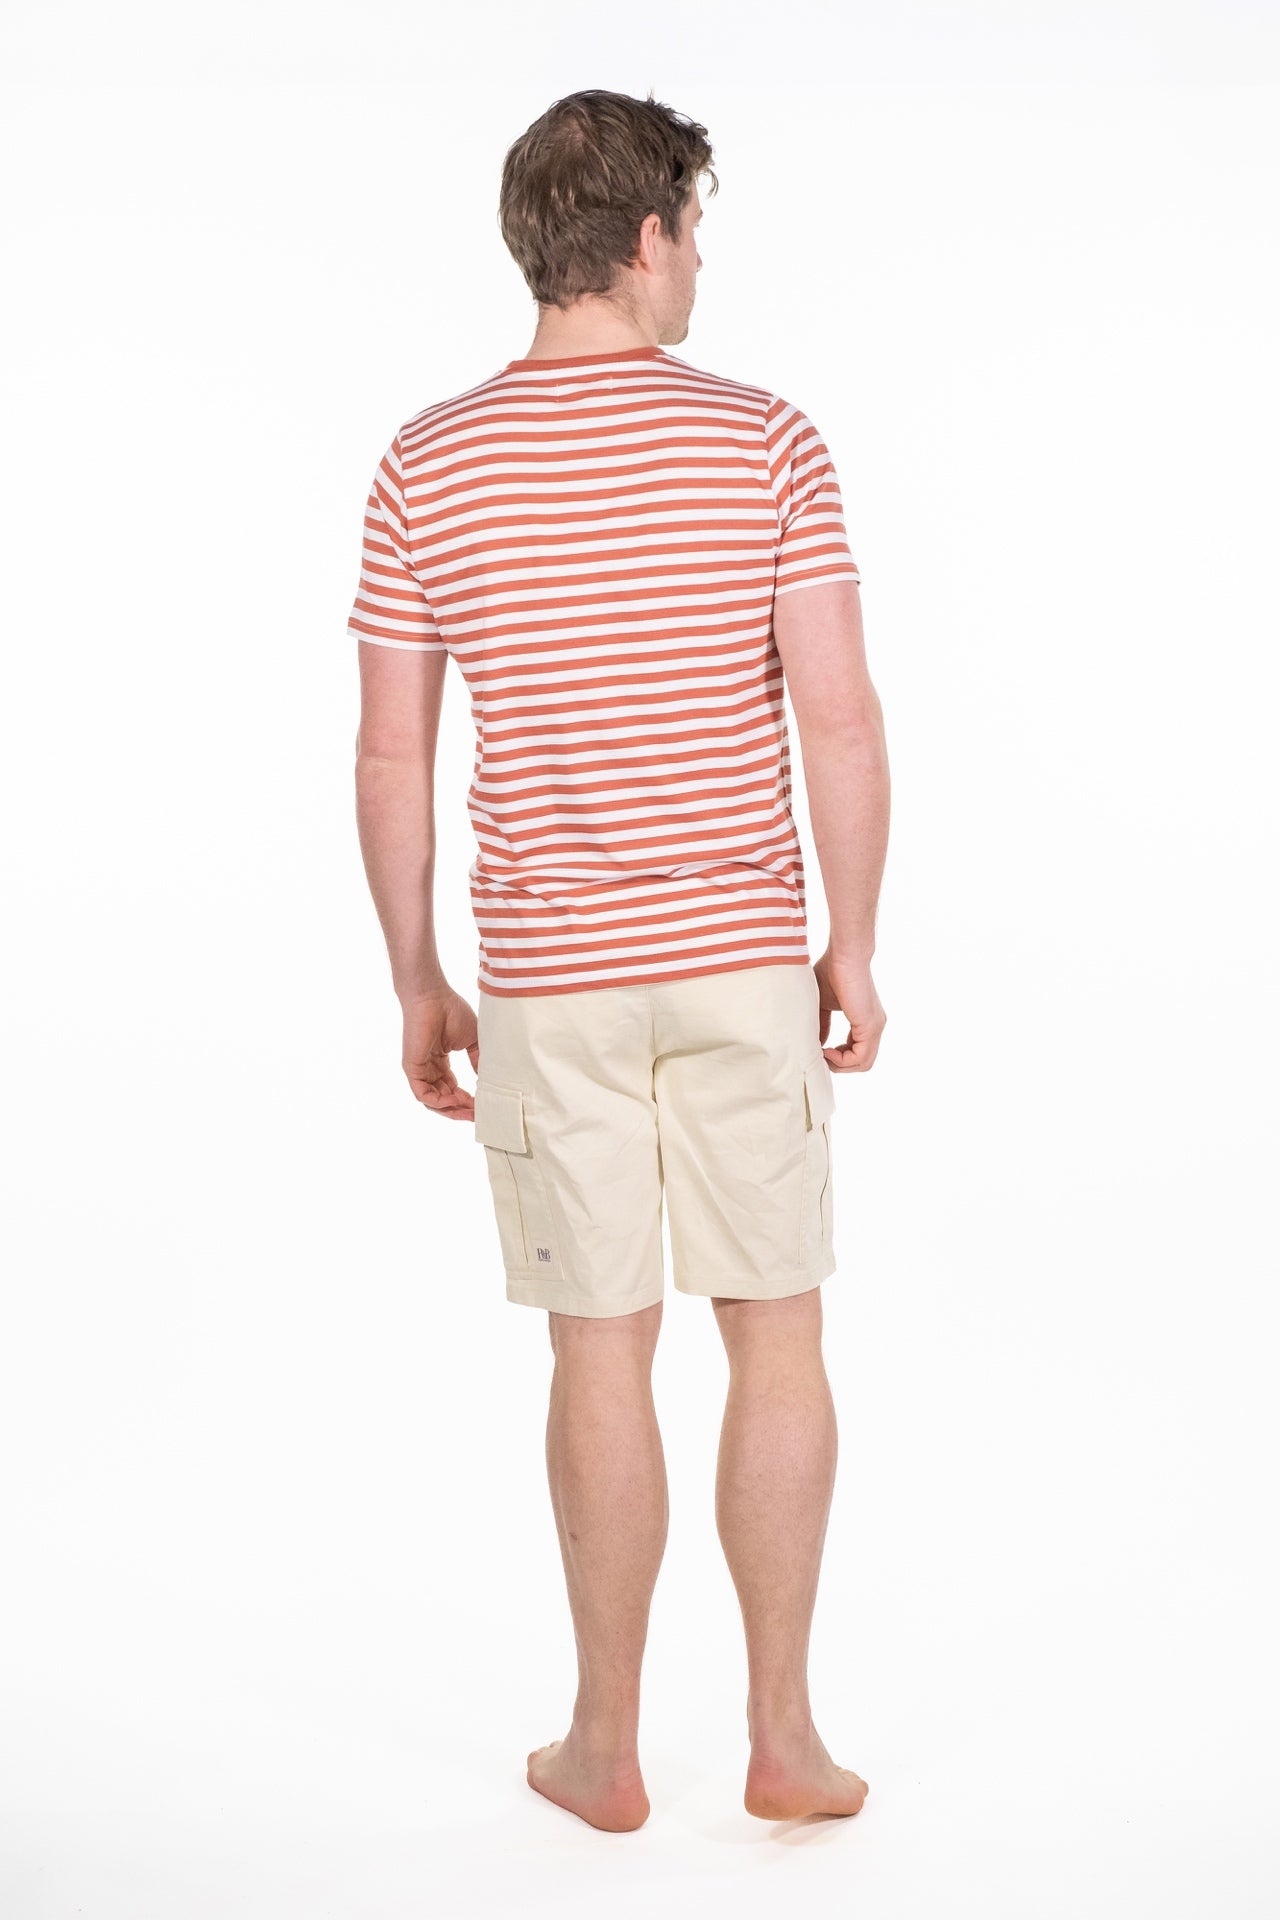 Albie Red Striped T-Shirt - Rupert and Buckley - T-Shirt